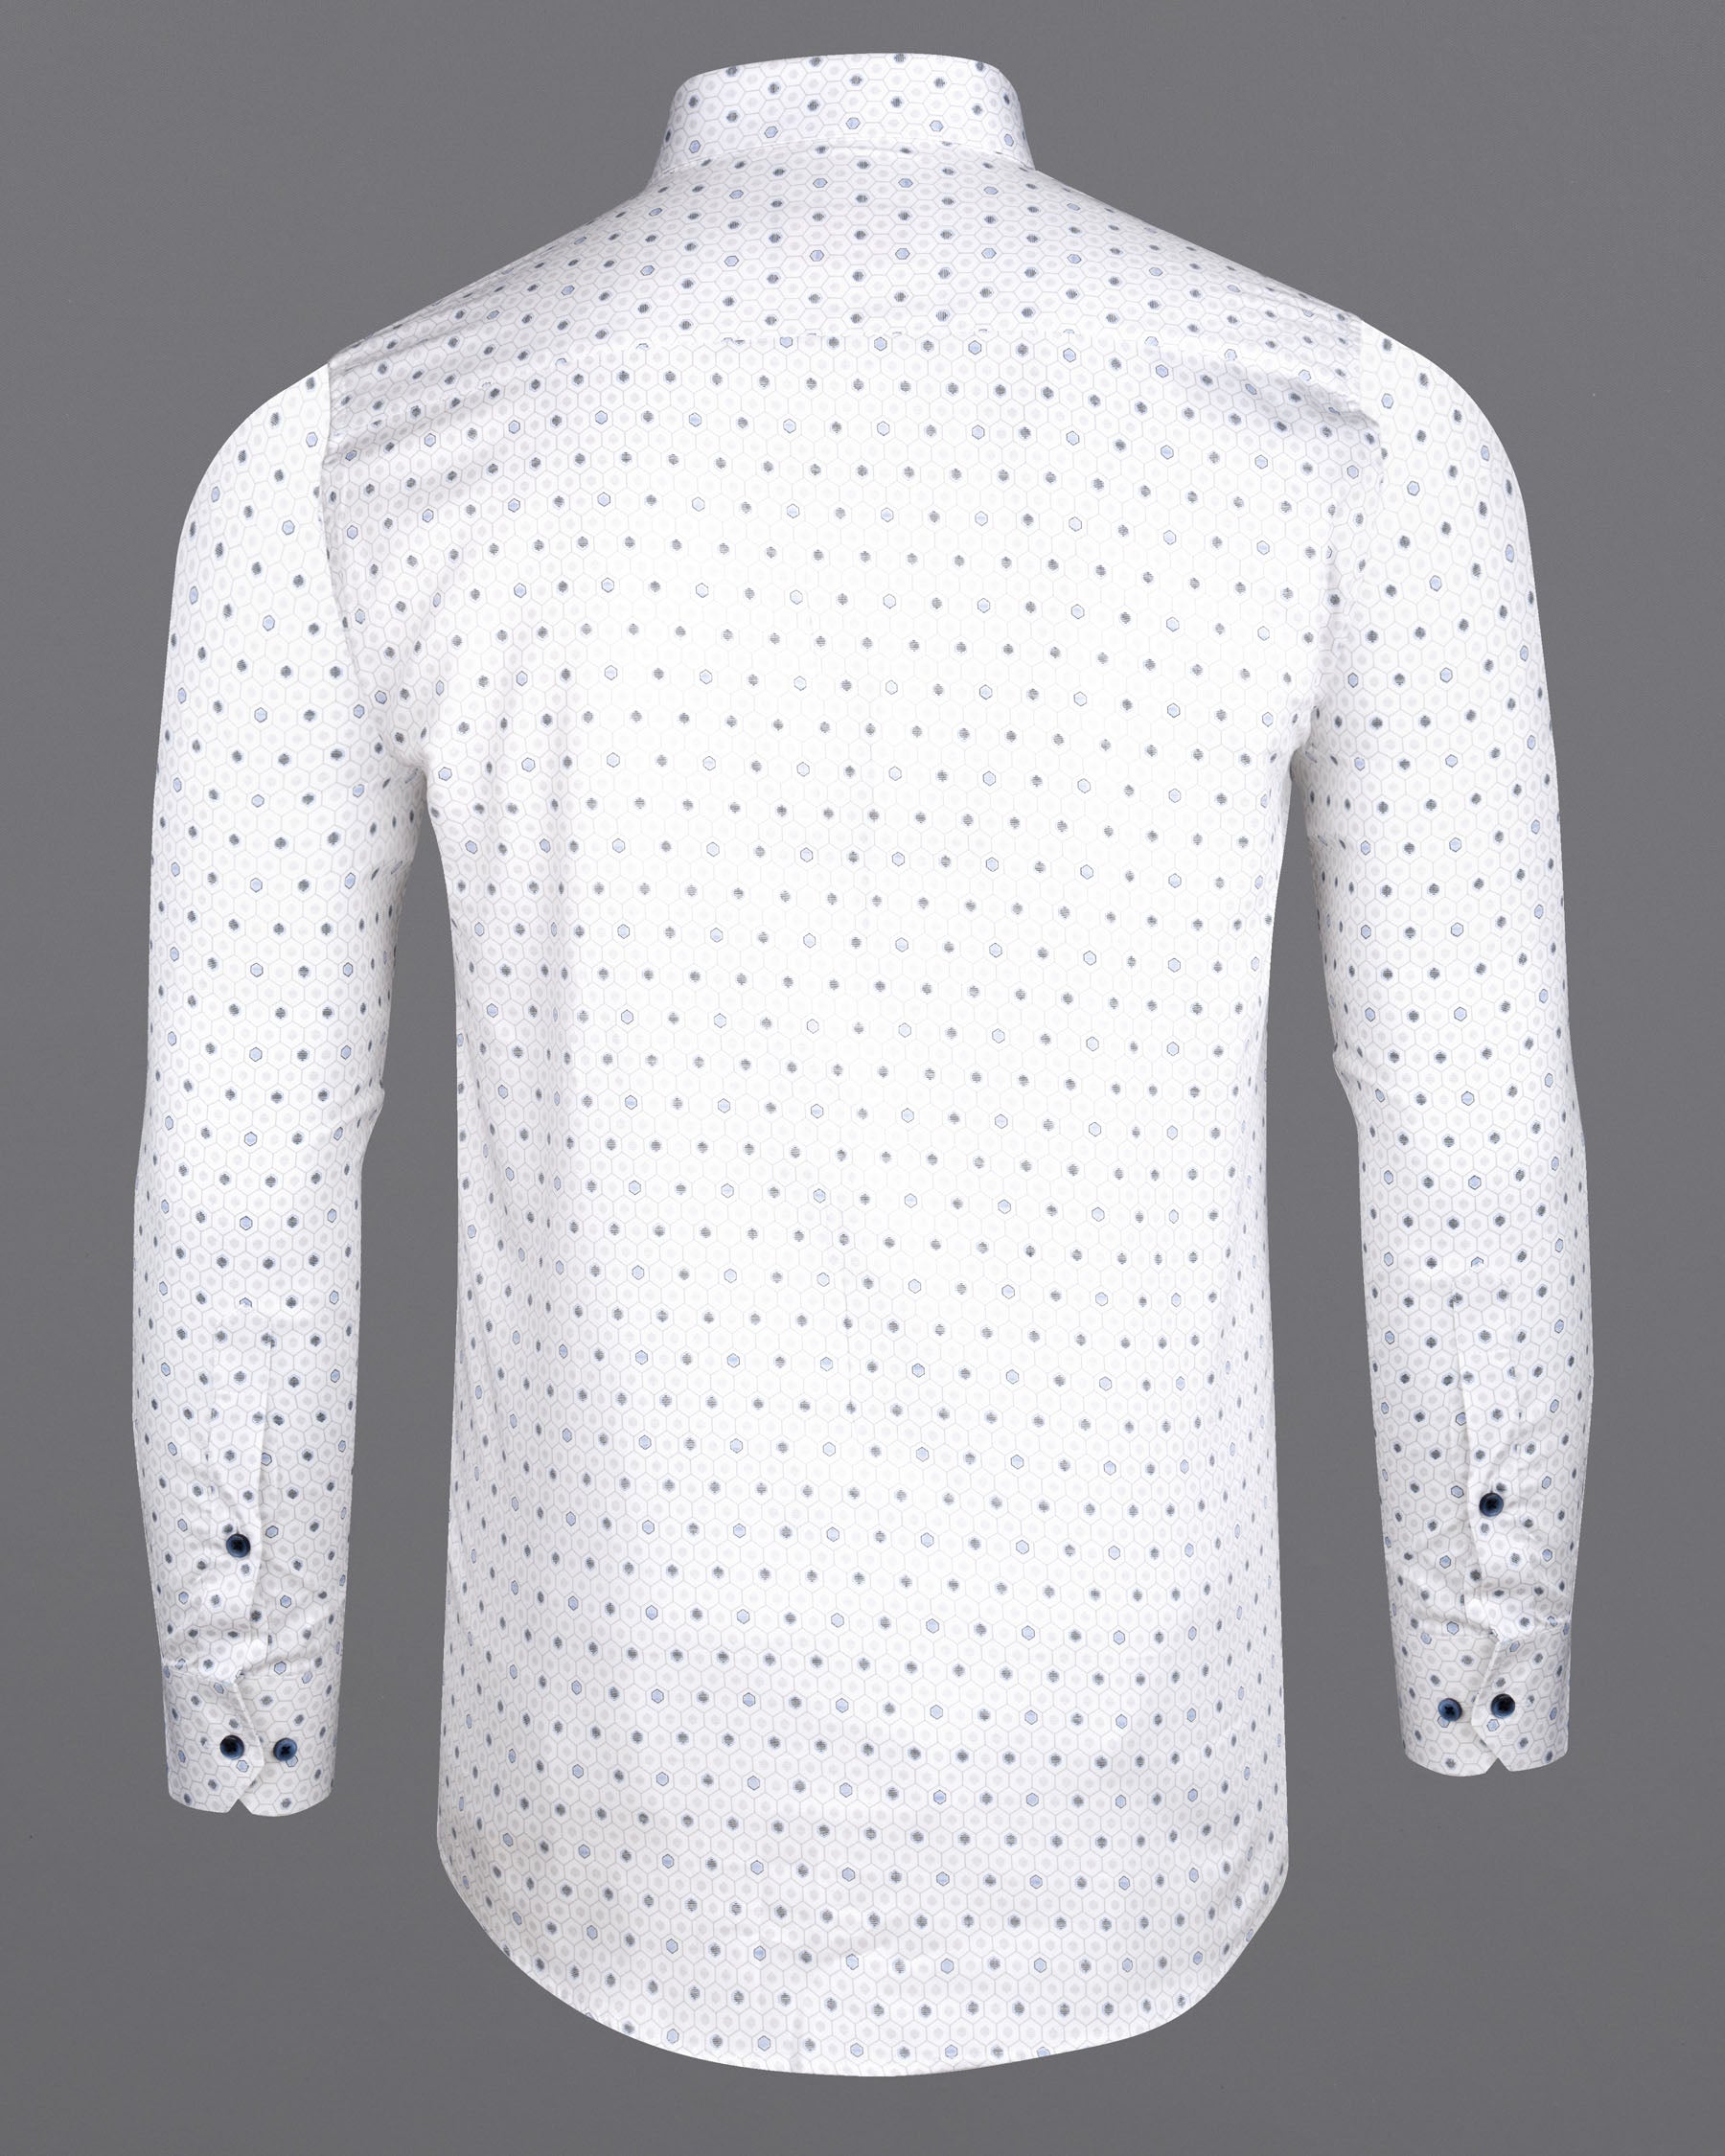 Bright White Hexagon Printed Super Soft Premium Cotton Shirt 6291-BLE-38, 6291-BLE-H-38, 6291-BLE-39, 6291-BLE-H-39, 6291-BLE-40, 6291-BLE-H-40, 6291-BLE-42, 6291-BLE-H-42, 6291-BLE-44, 6291-BLE-H-44, 6291-BLE-46, 6291-BLE-H-46, 6291-BLE-48, 6291-BLE-H-48, 6291-BLE-50, 6291-BLE-H-50, 6291-BLE-52, 6291-BLE-H-52